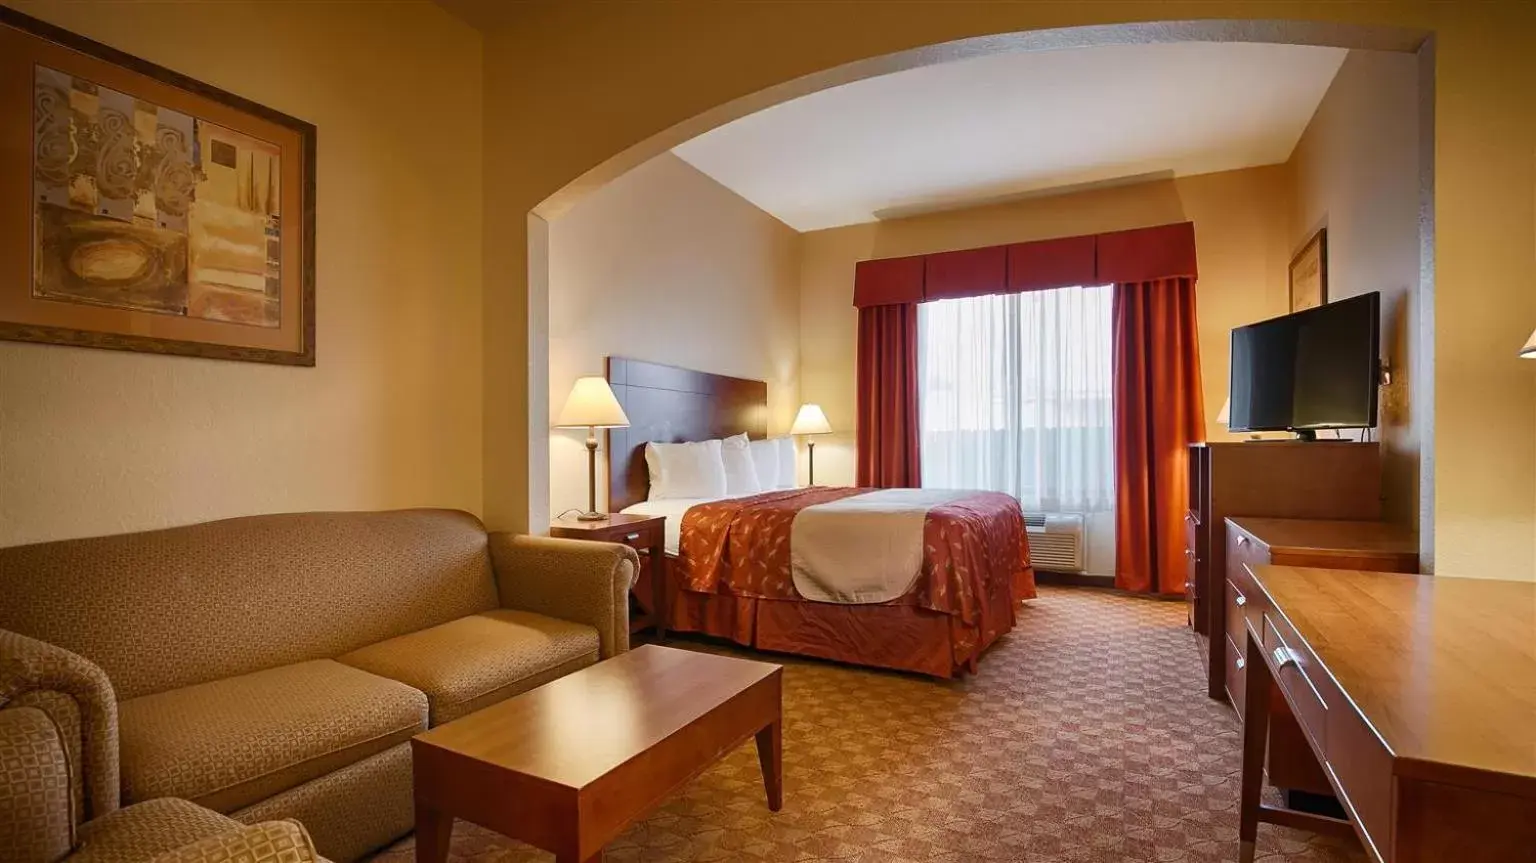 Day, Room Photo in Americas Best Value Inn & Suites-Livingston